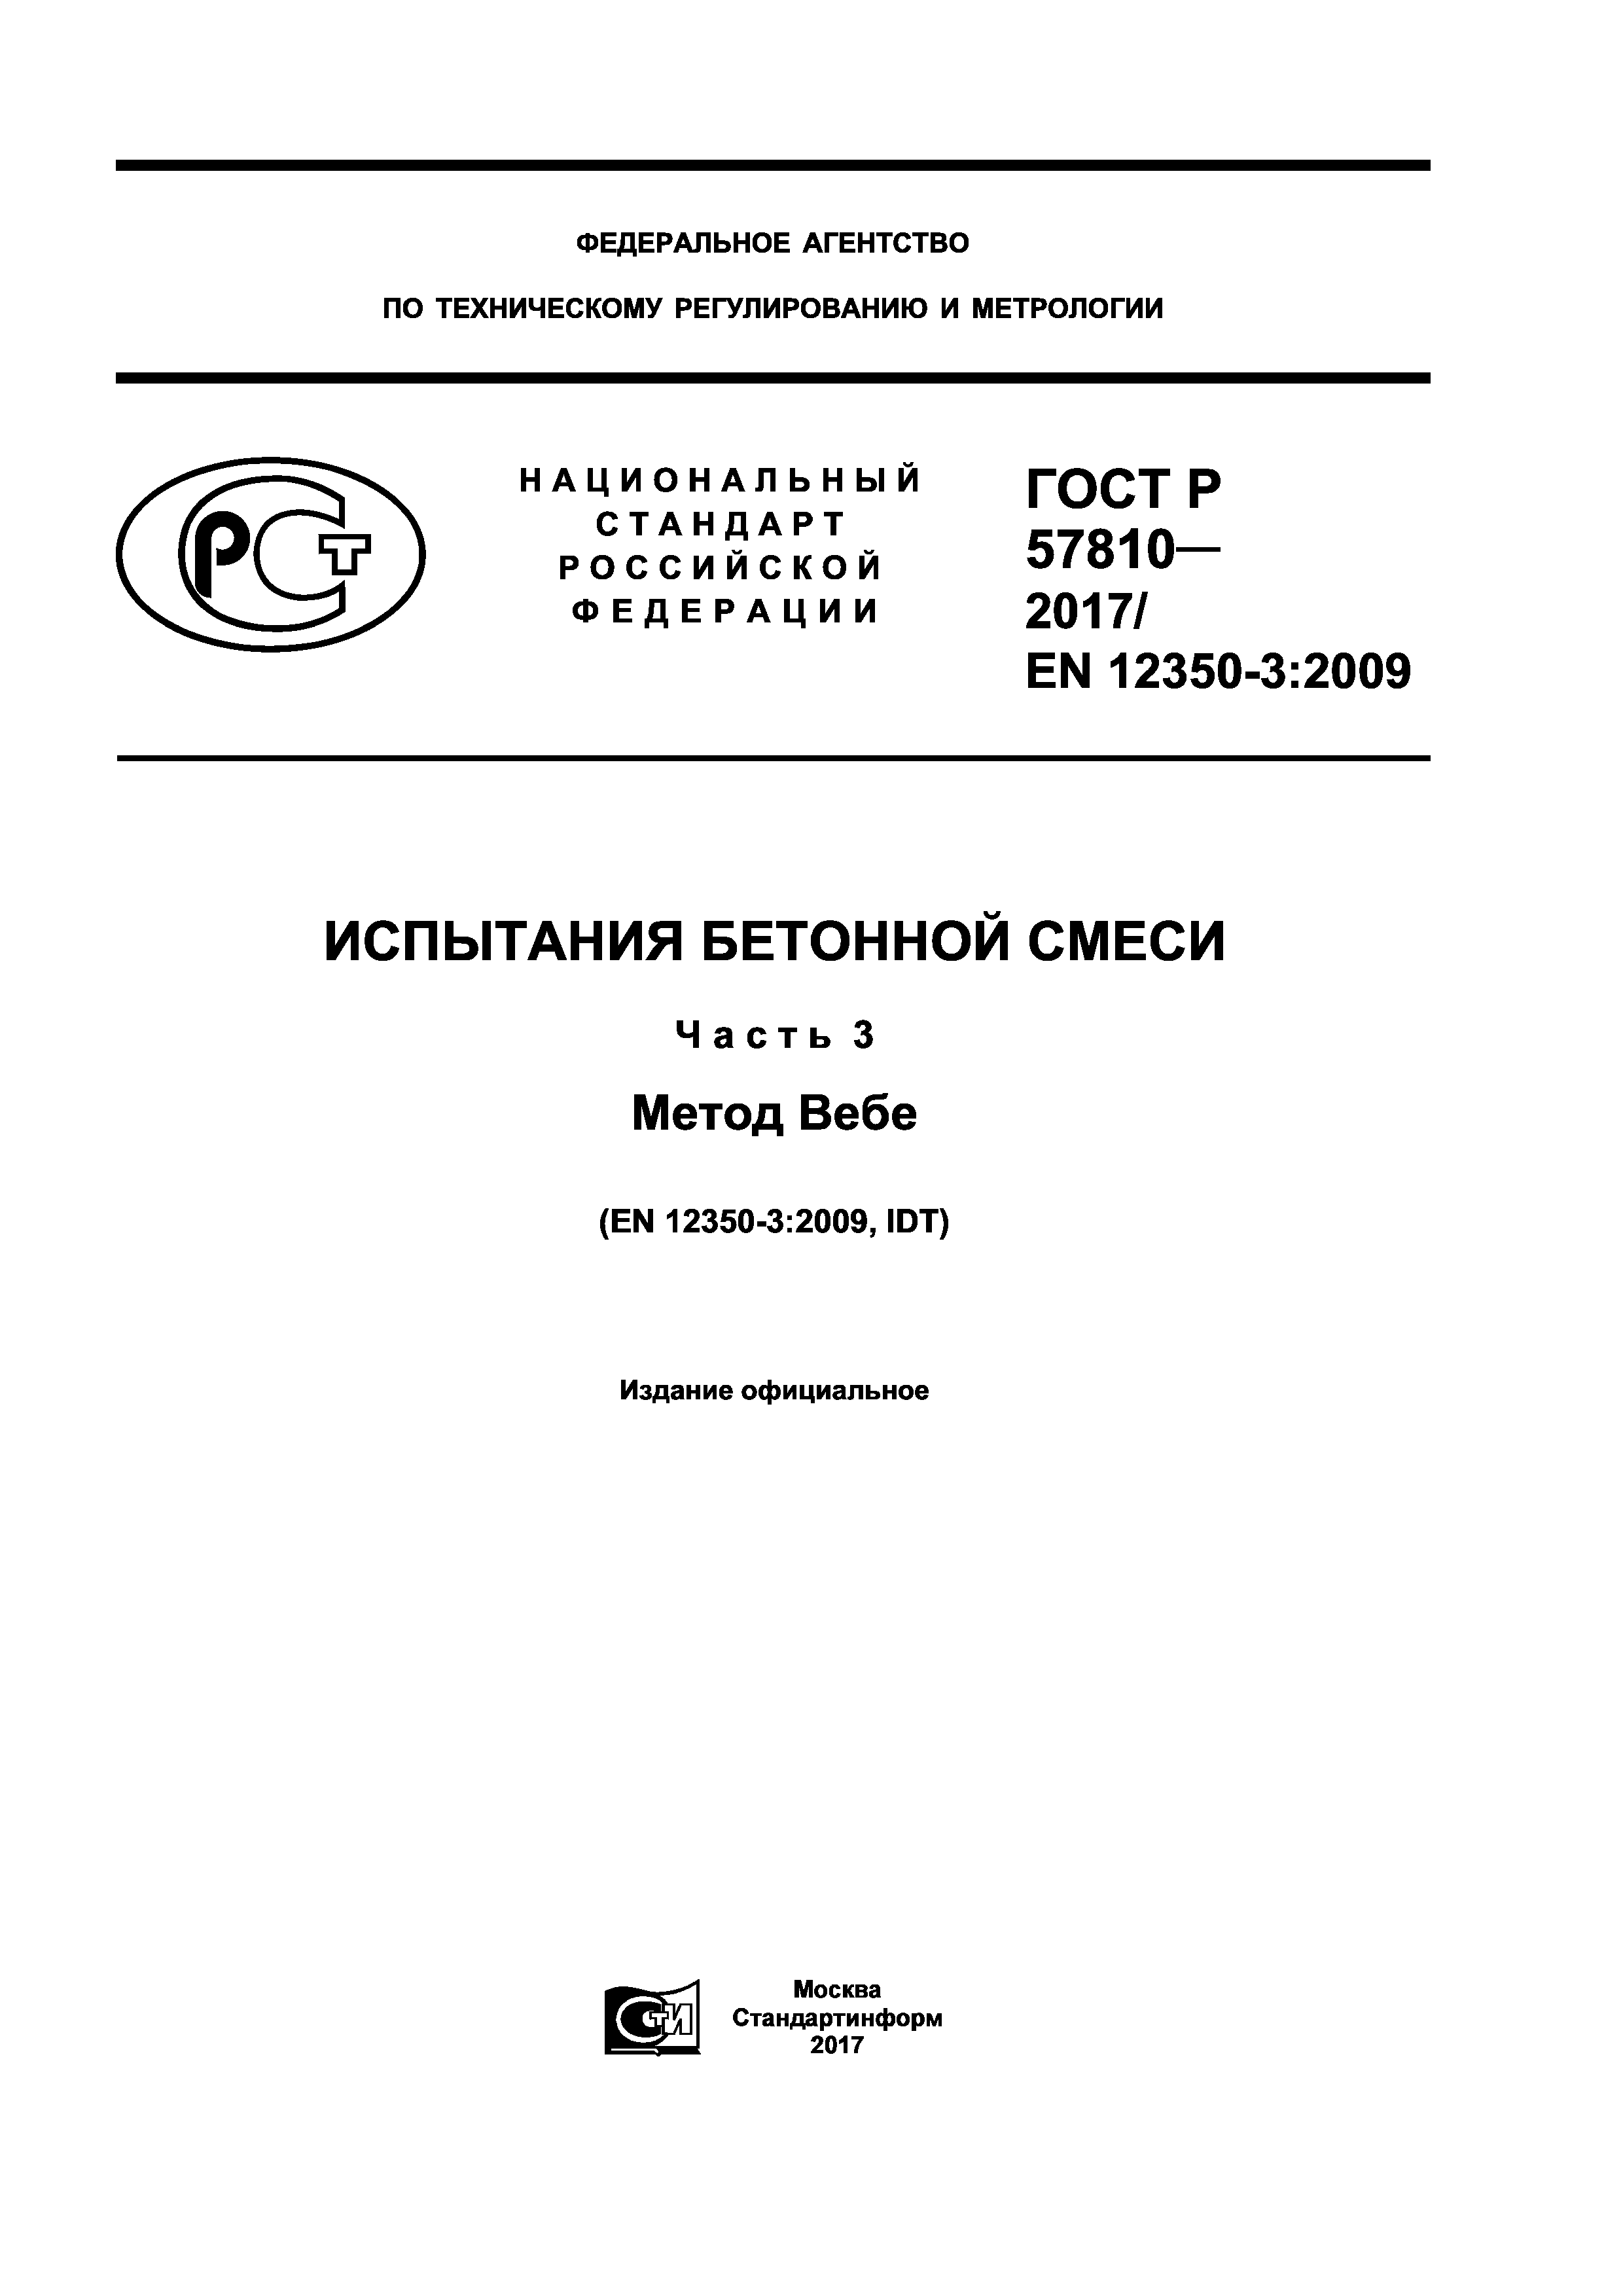 ГОСТ Р 57810-2017